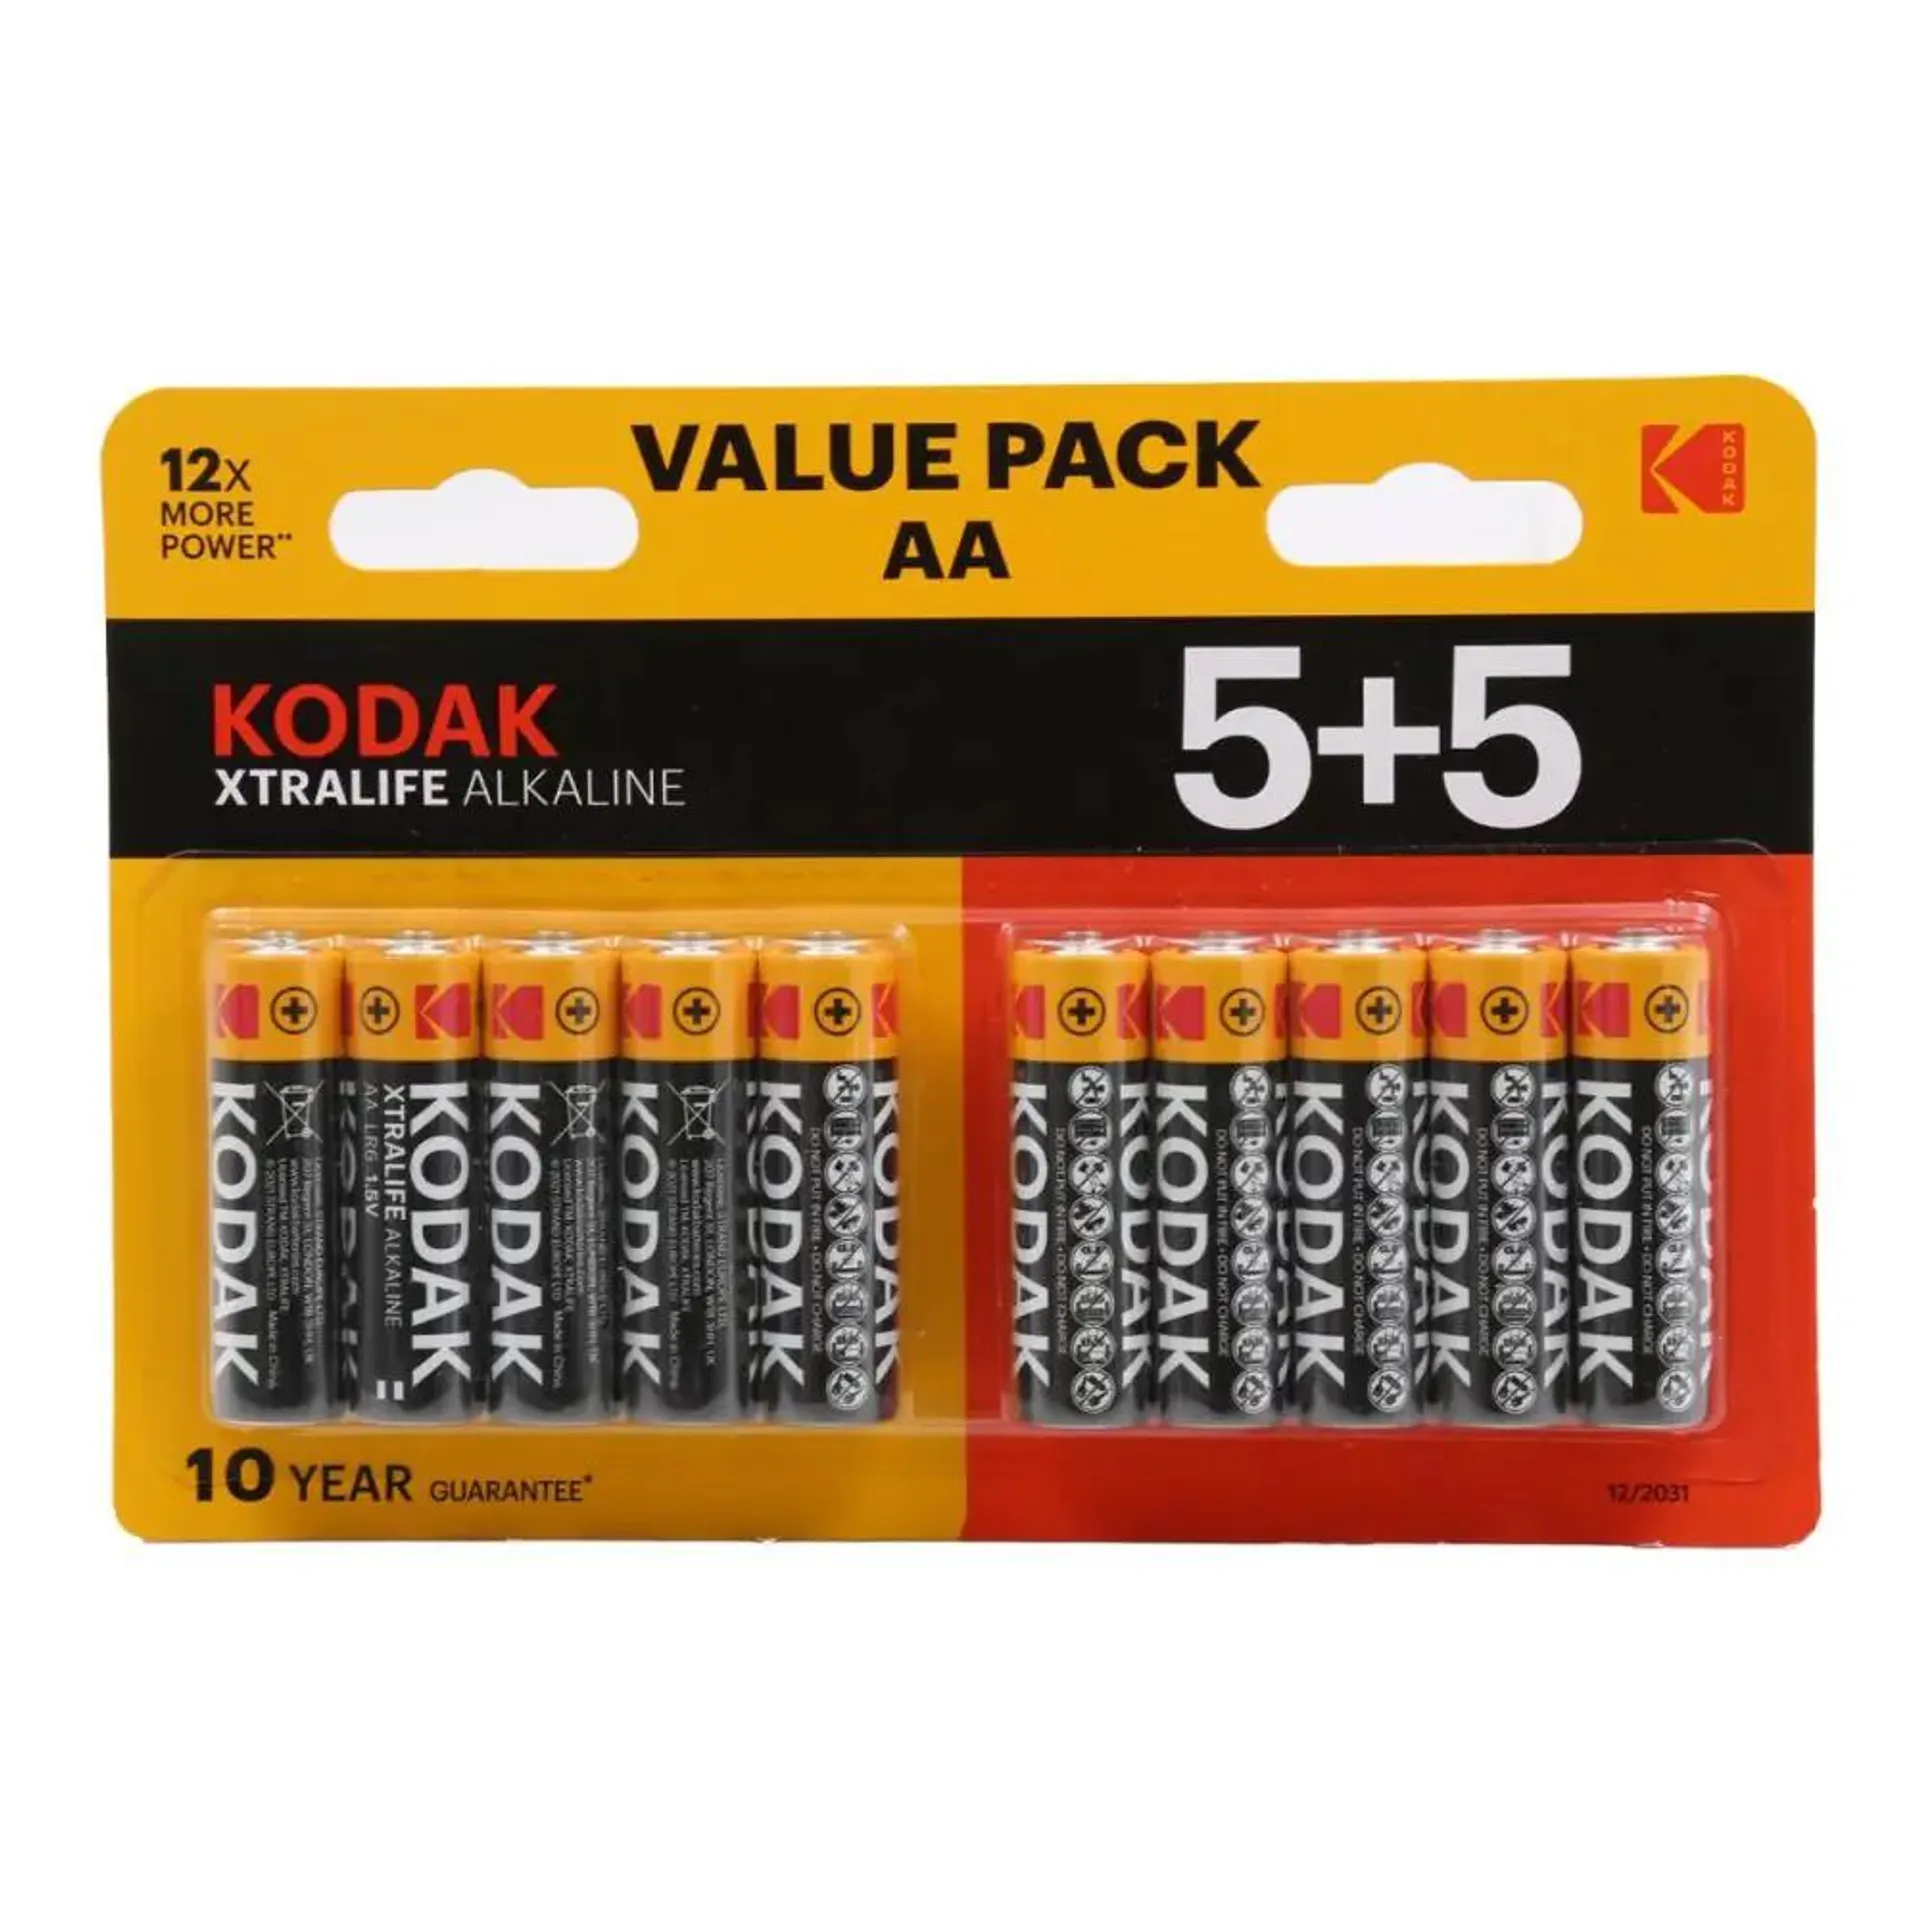 Kodak Xtralife alkaline AA 5+5 - 1.5V